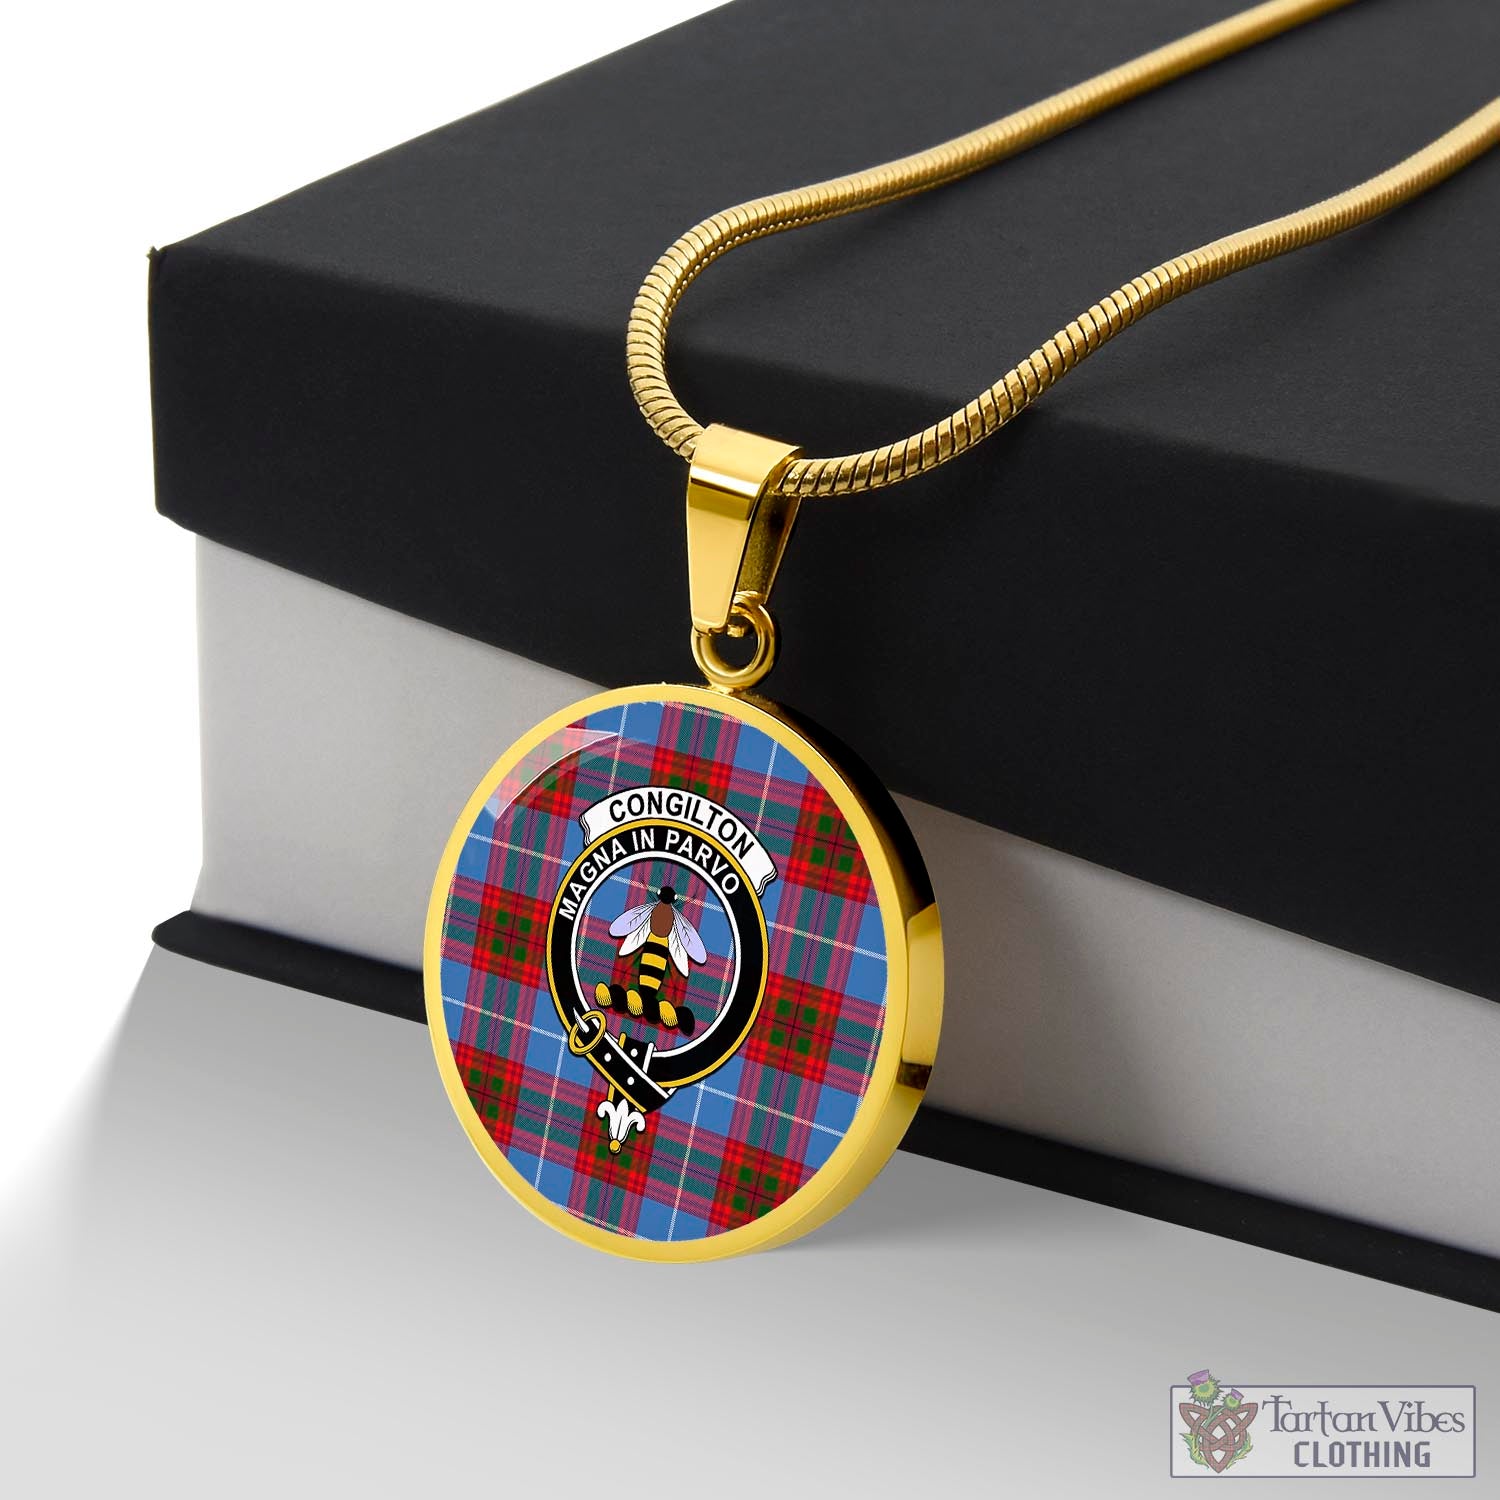 Tartan Vibes Clothing Congilton Tartan Circle Necklace with Family Crest